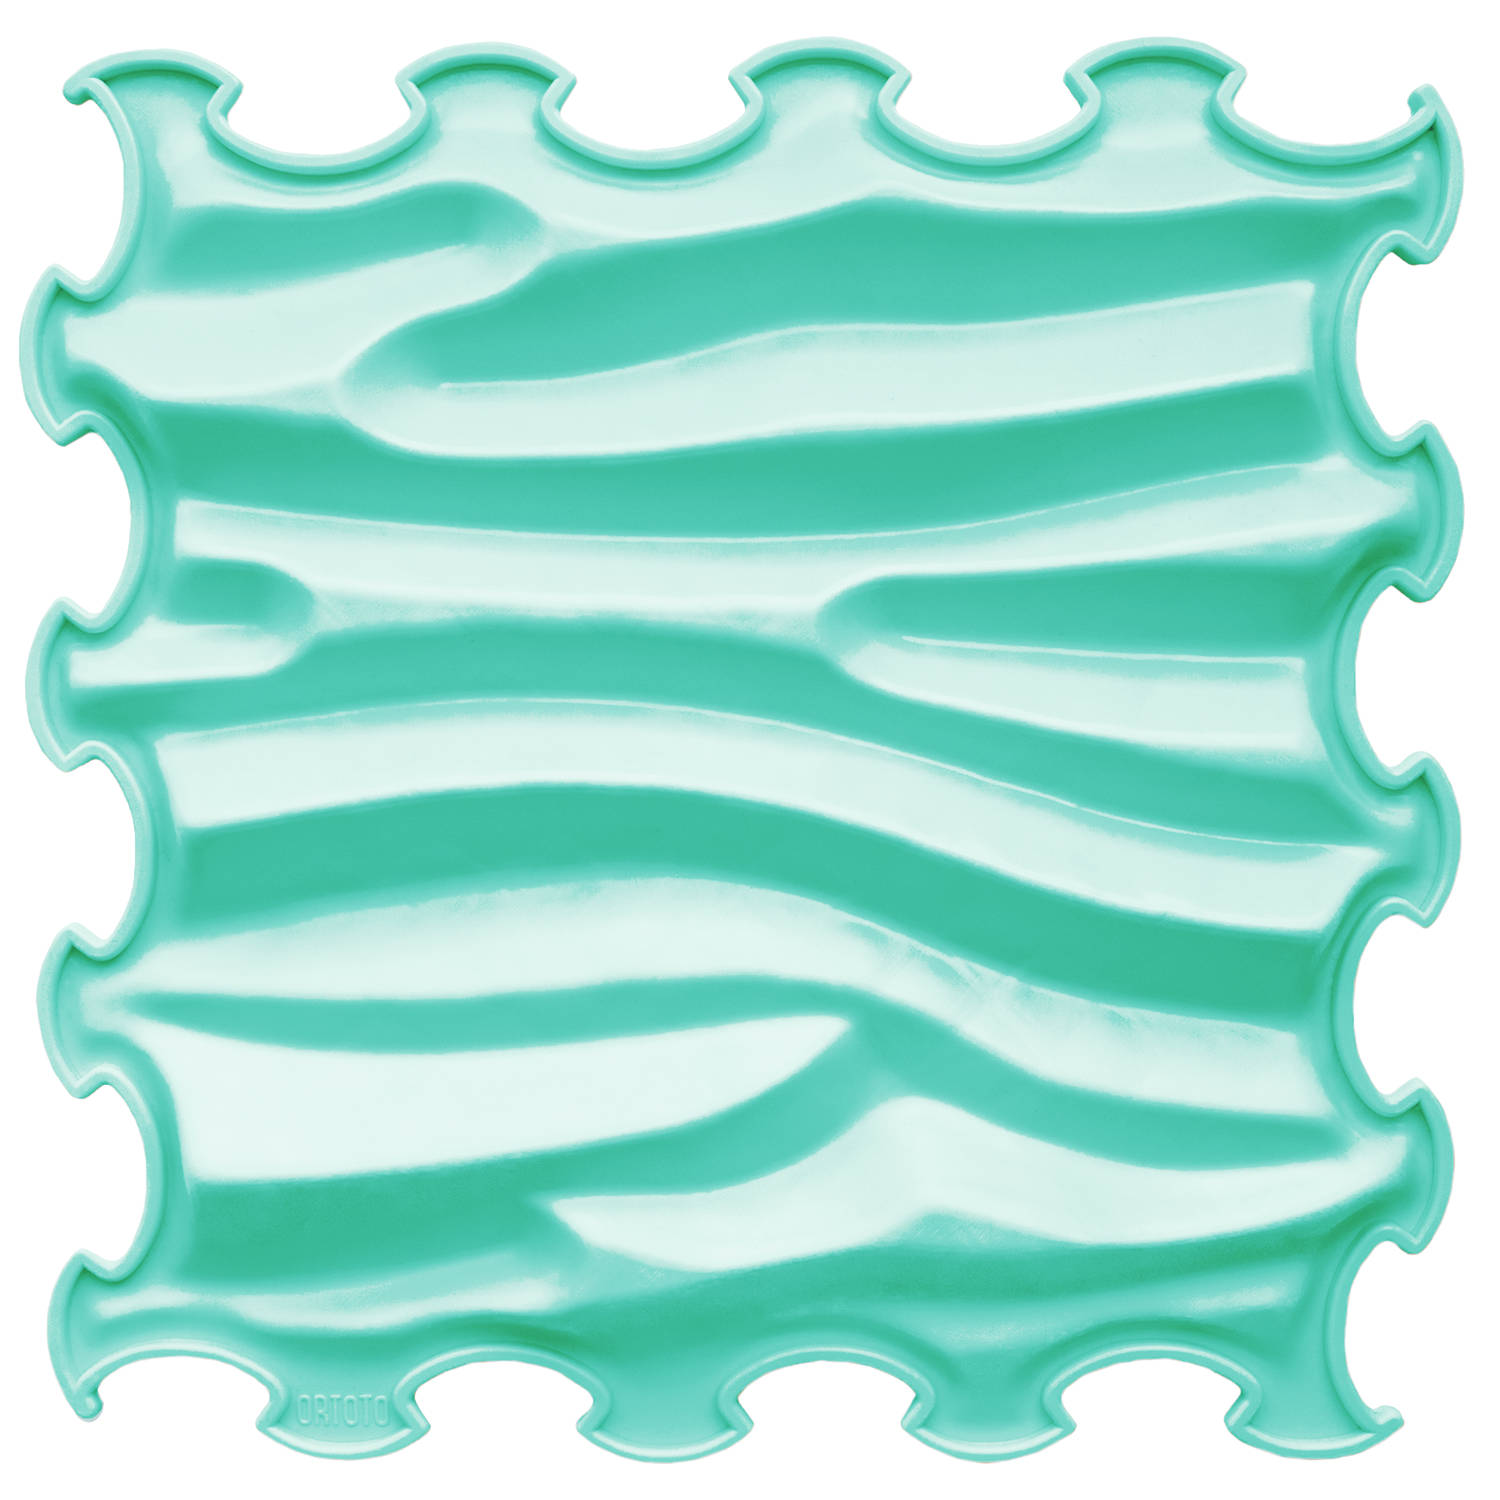 Ortoto Sandy Waves mat Sea Turquoise